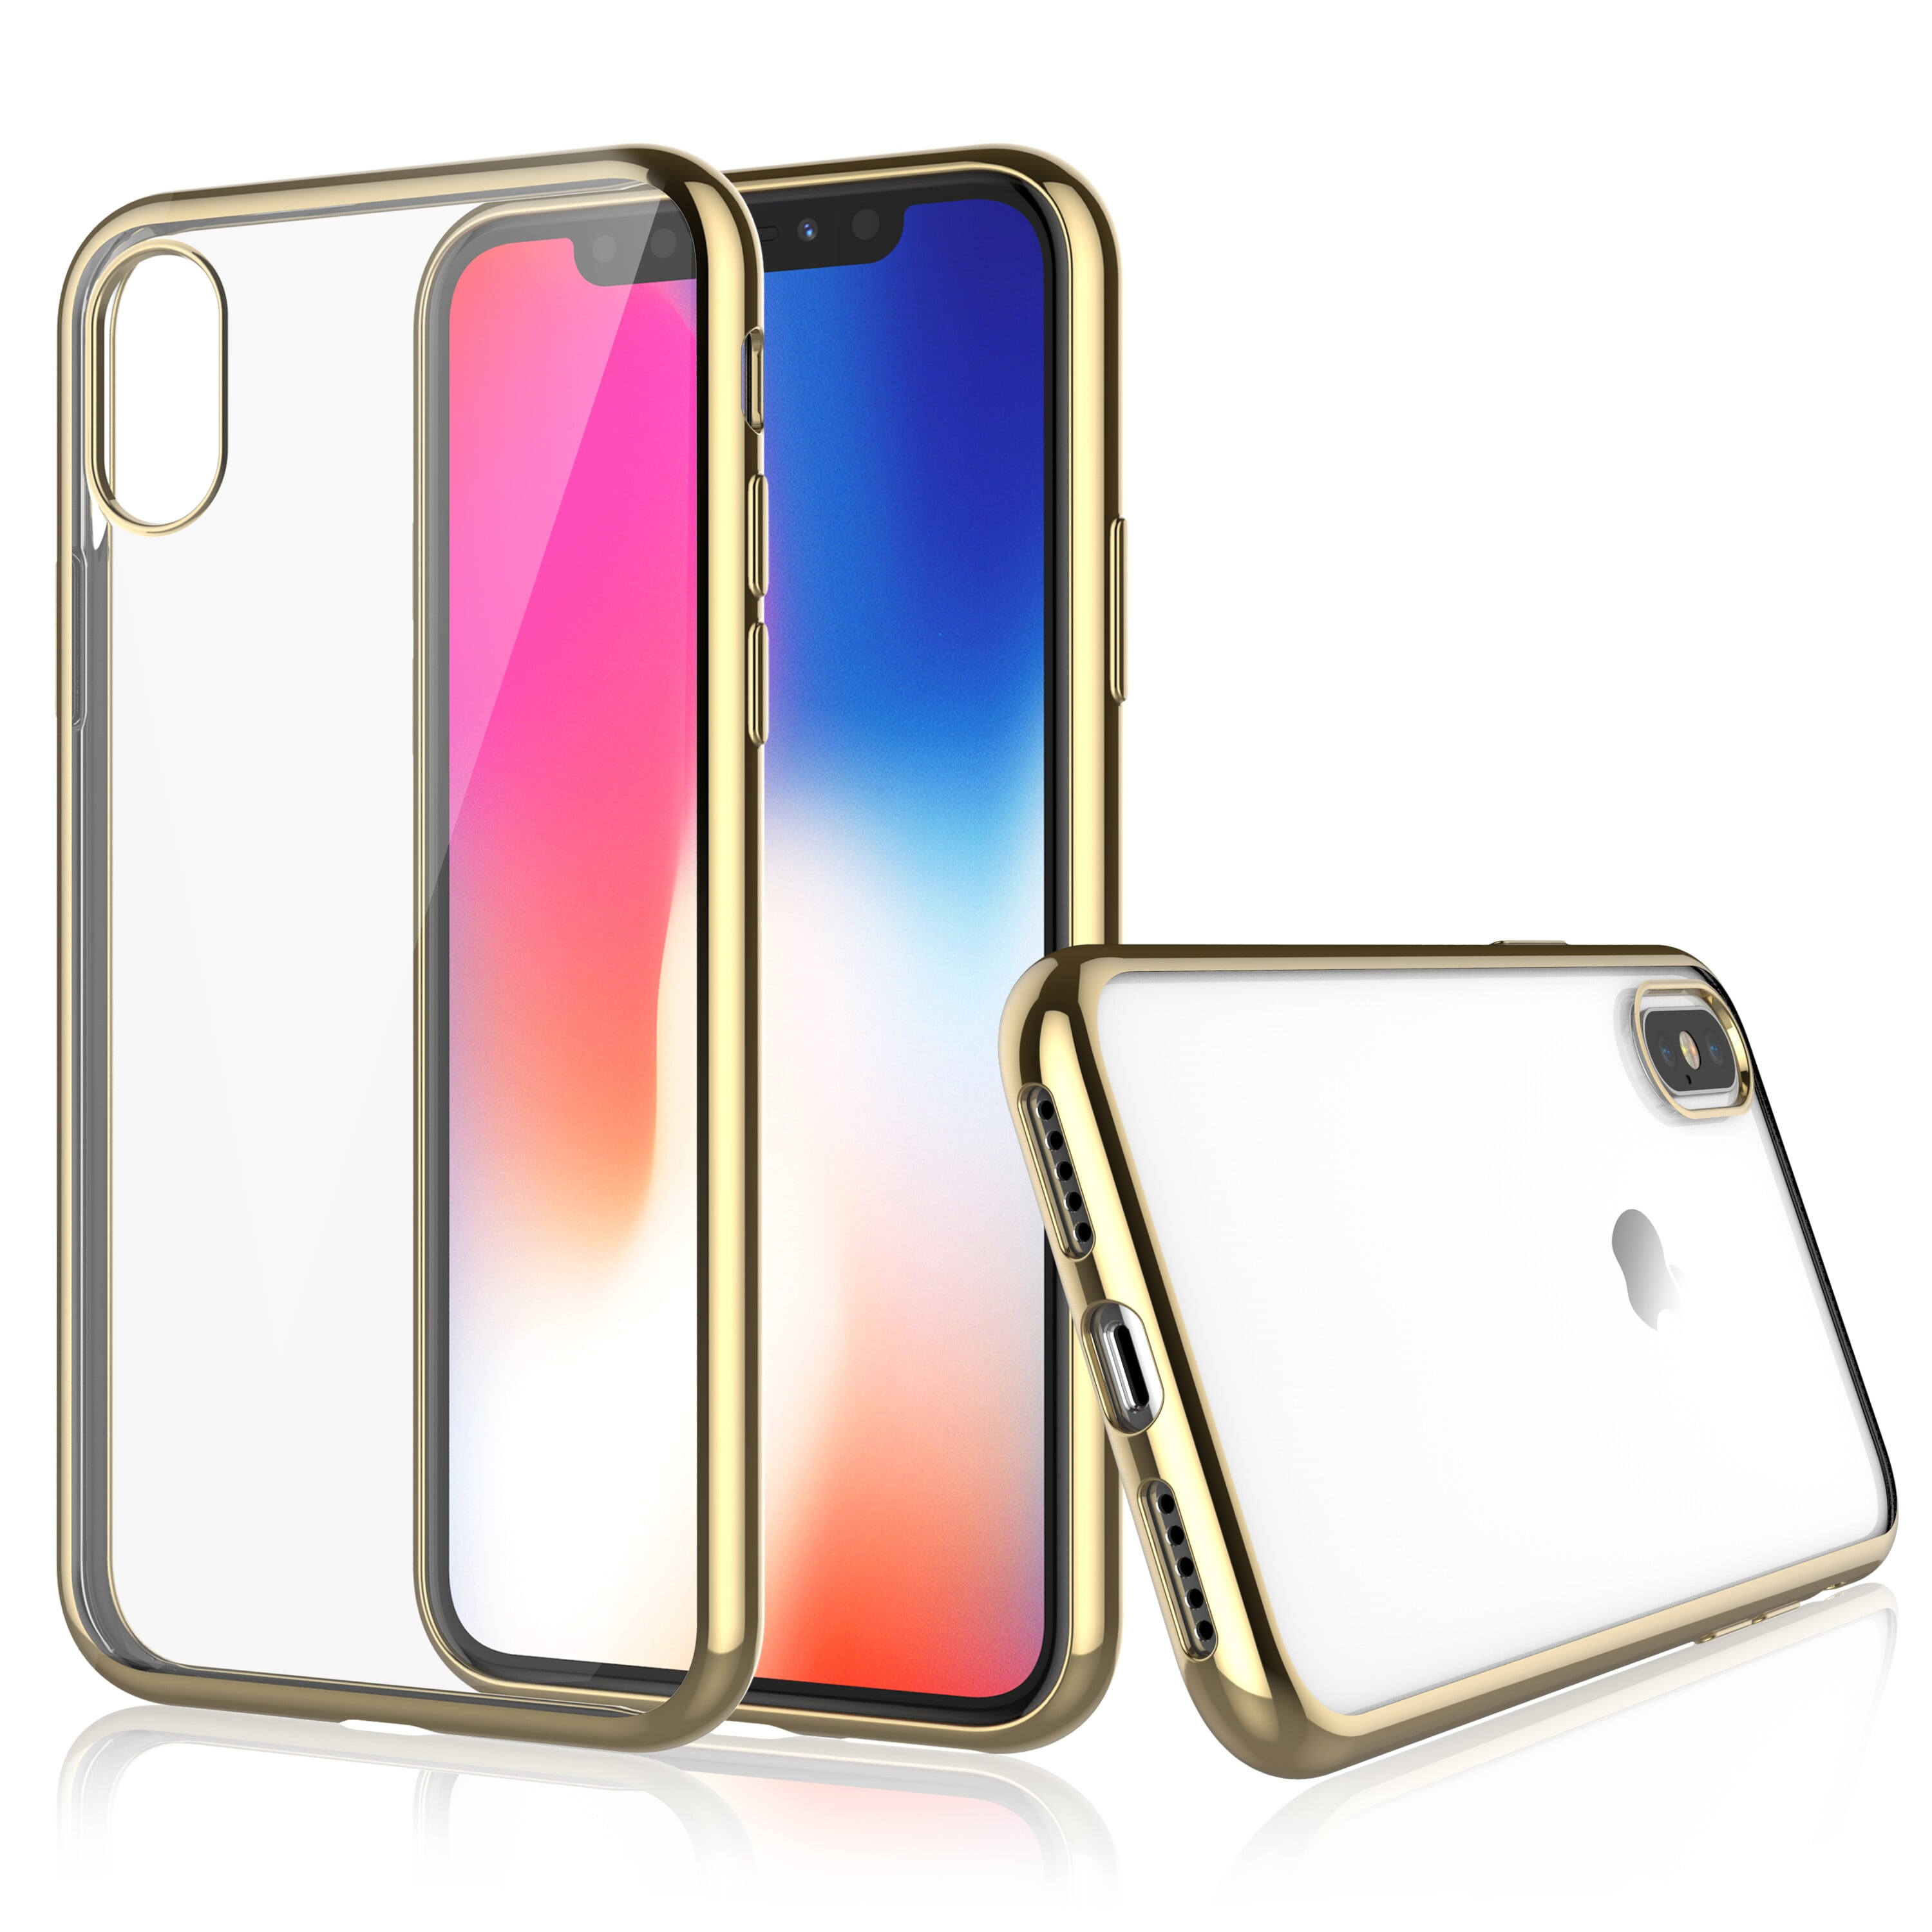 iPhone X Case, Apple iPhone X Case, iPhone X Study Case, Njjex iPhone 10 Case Cover Crystal Shock-Absorption Soft TPU Bumper and Anti-Scratch Ultra Sturdy Slim Case For Apple iPhone X - Gold